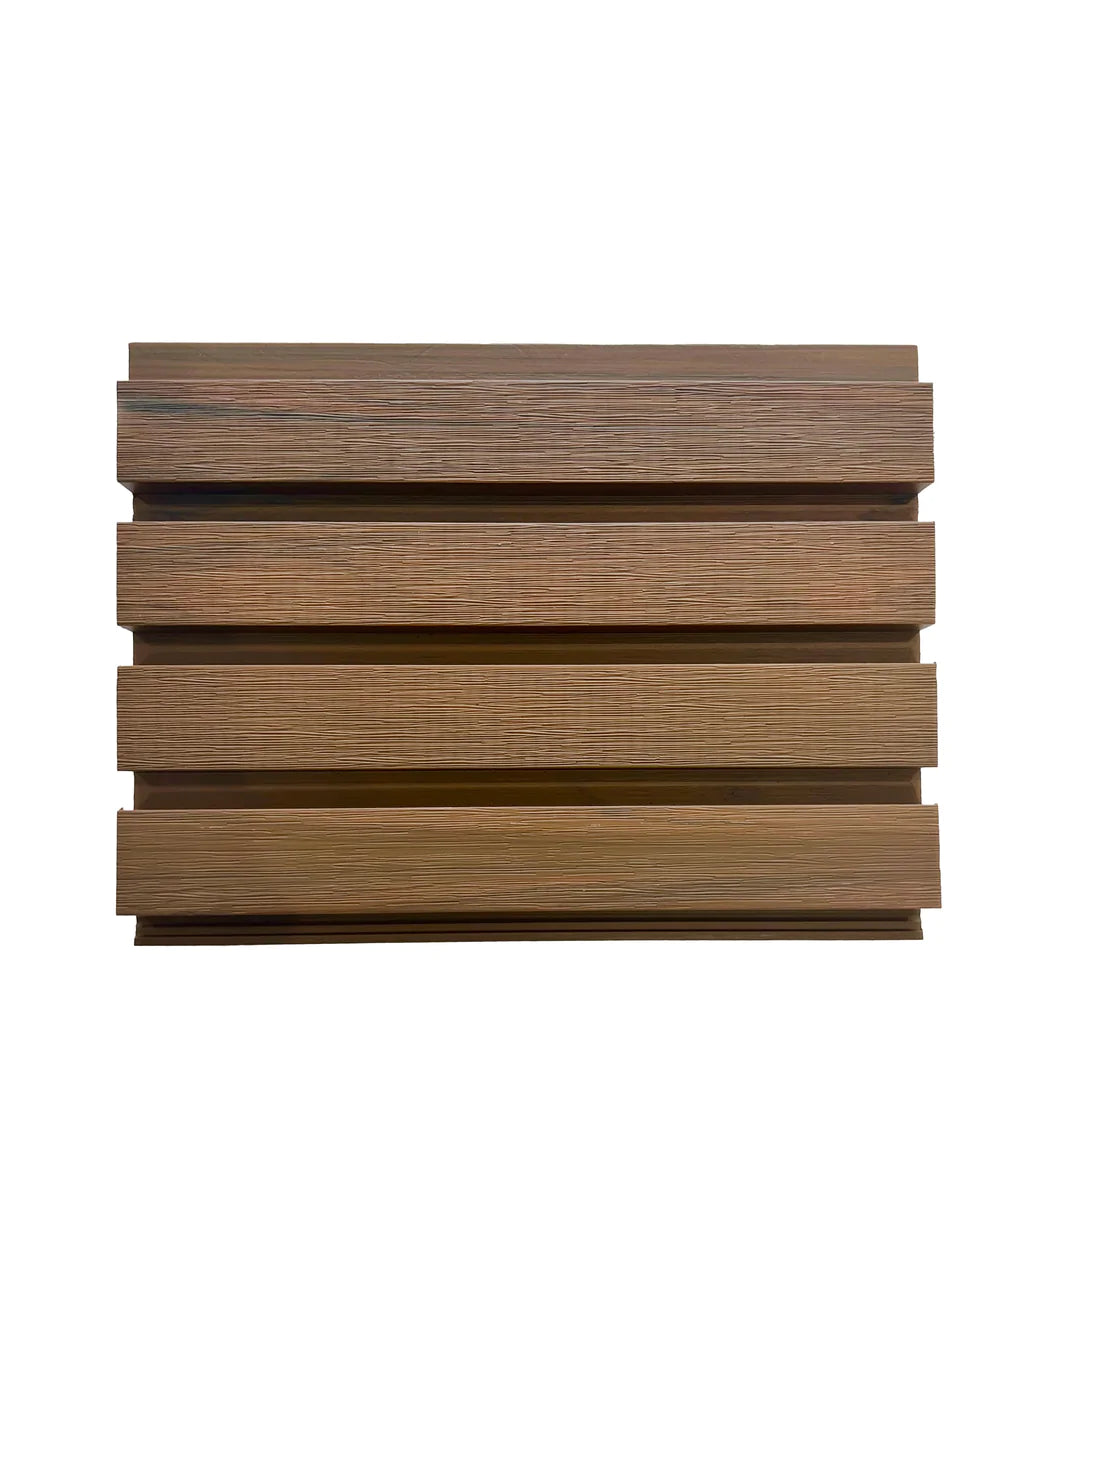 Composite Slatted Cladding – Golden Oak - Series 1